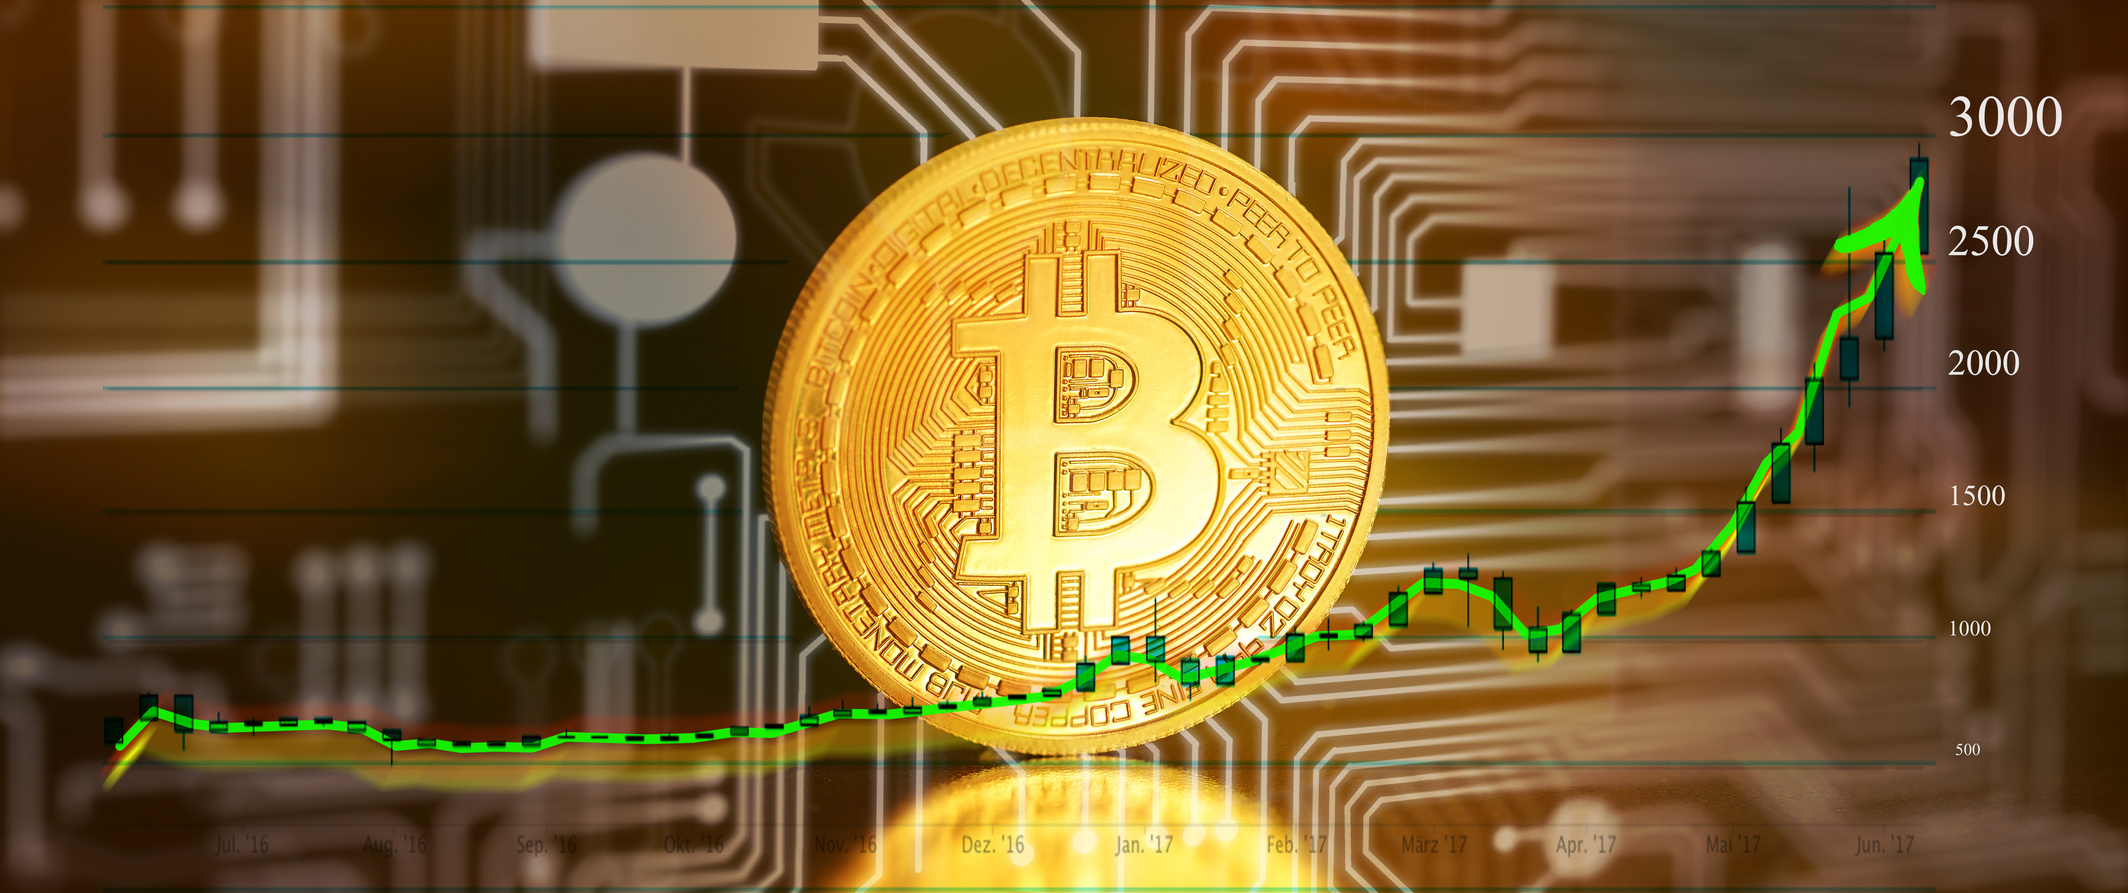 mit bitcoin geld verdienen bitcoin investor tool indikator